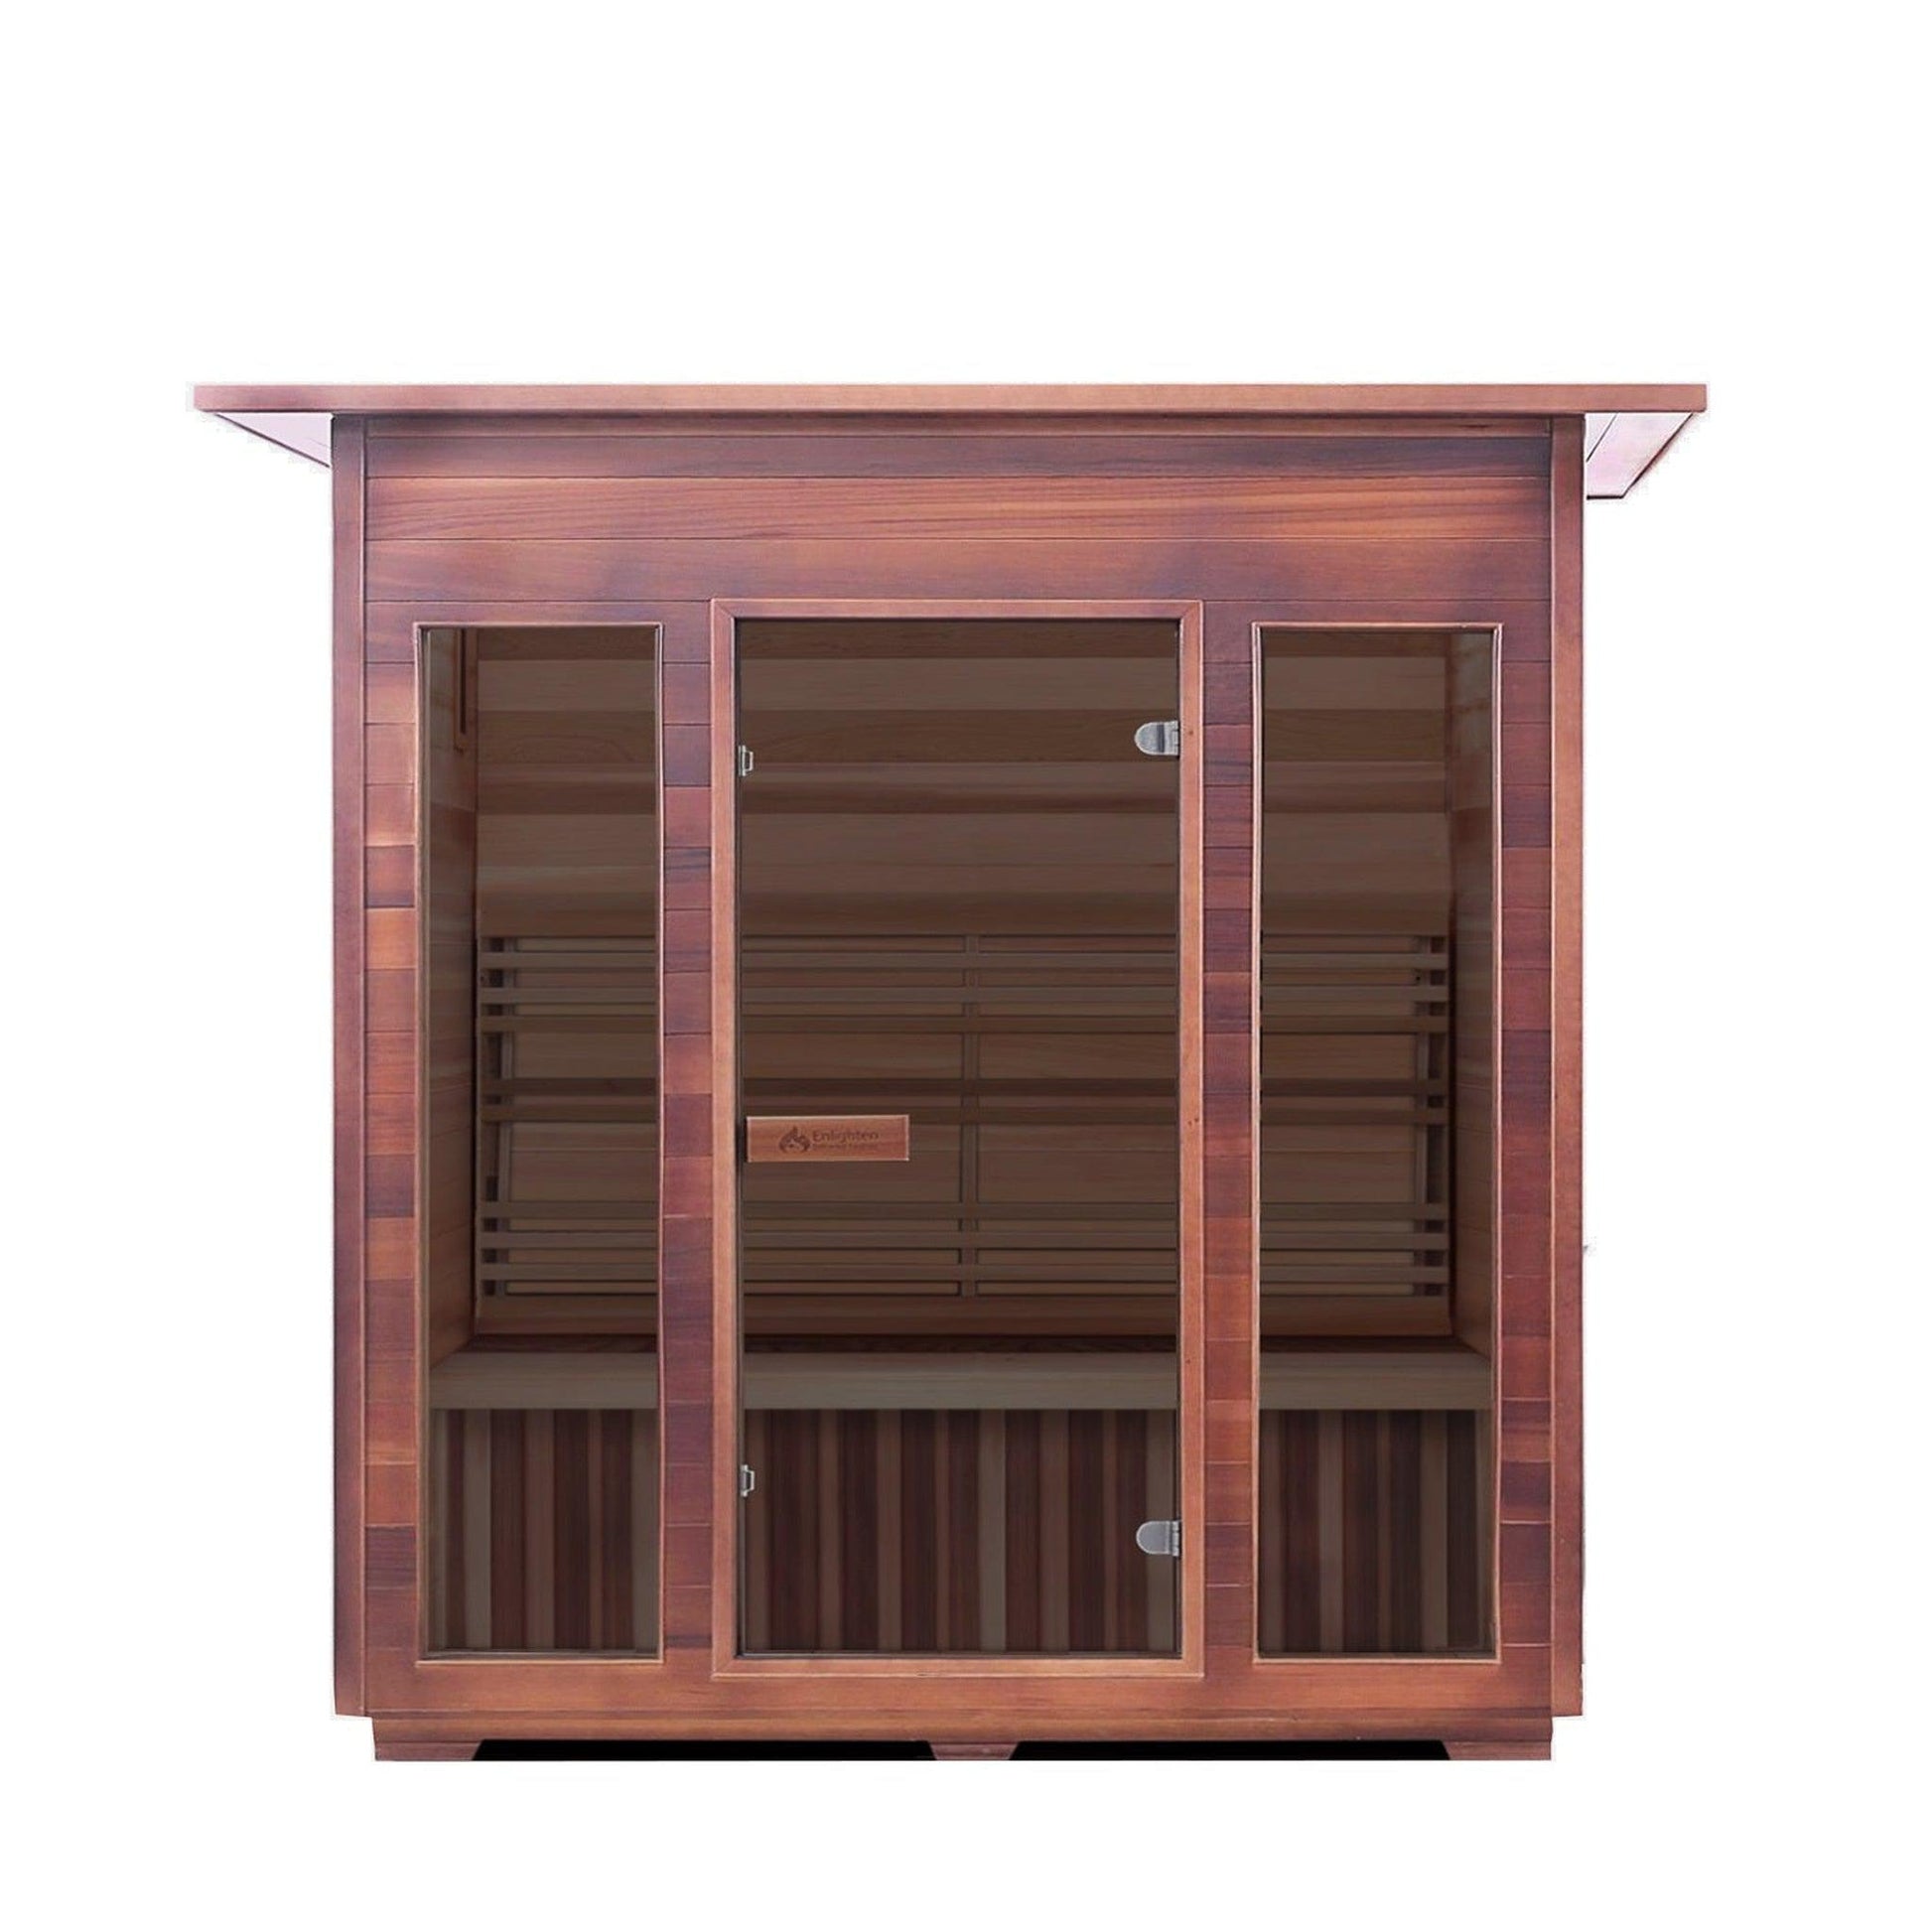 Enlighten SaunaTerra SunRise 4-Person Dry Traditional Indoor Sauna